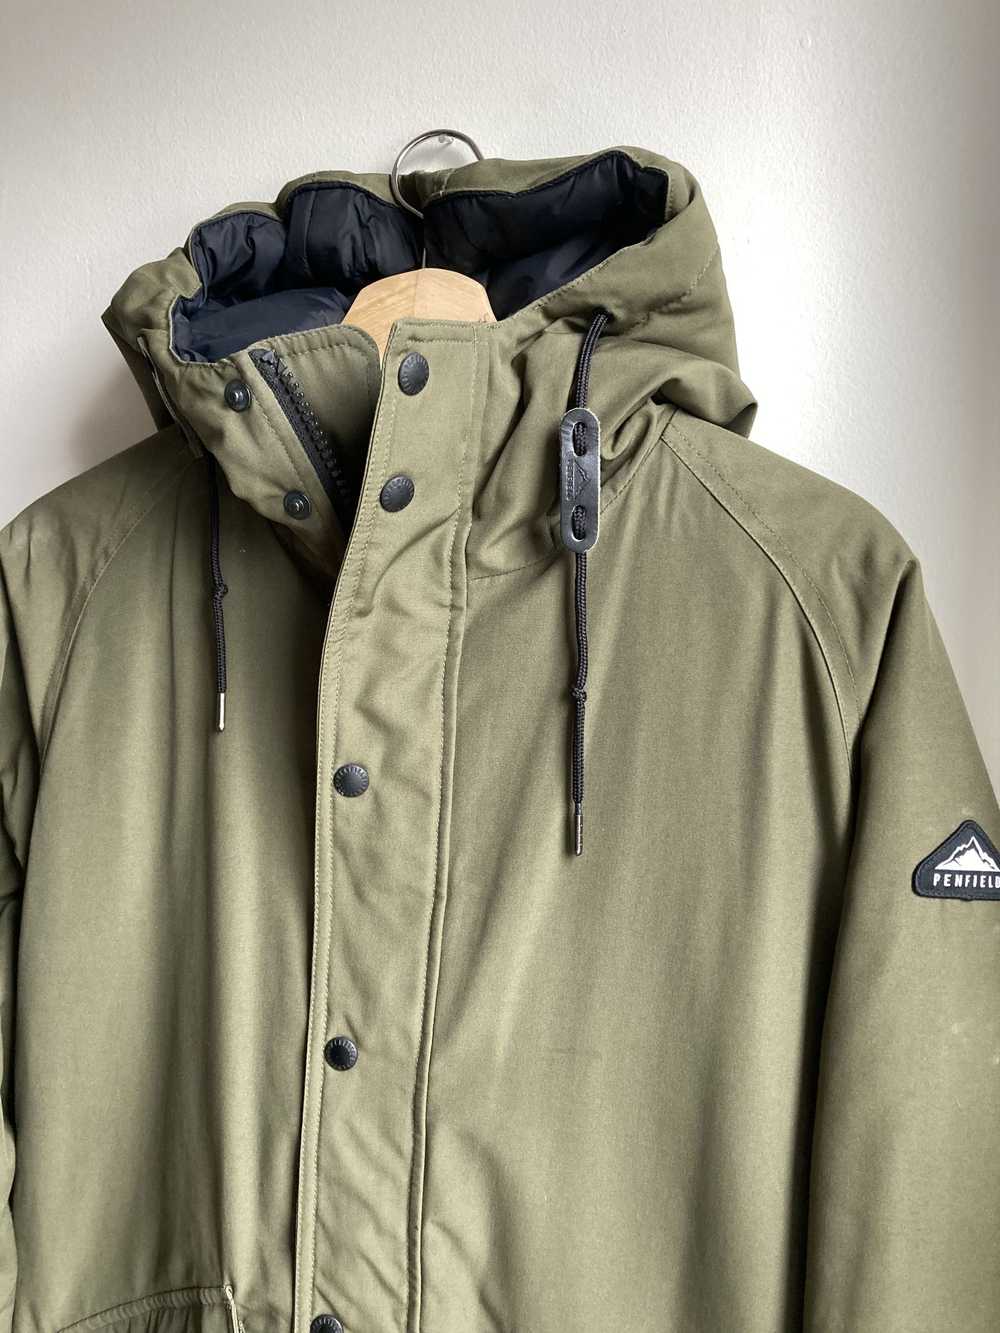 Penfield Kingman Jacket - Winter Coat - image 2